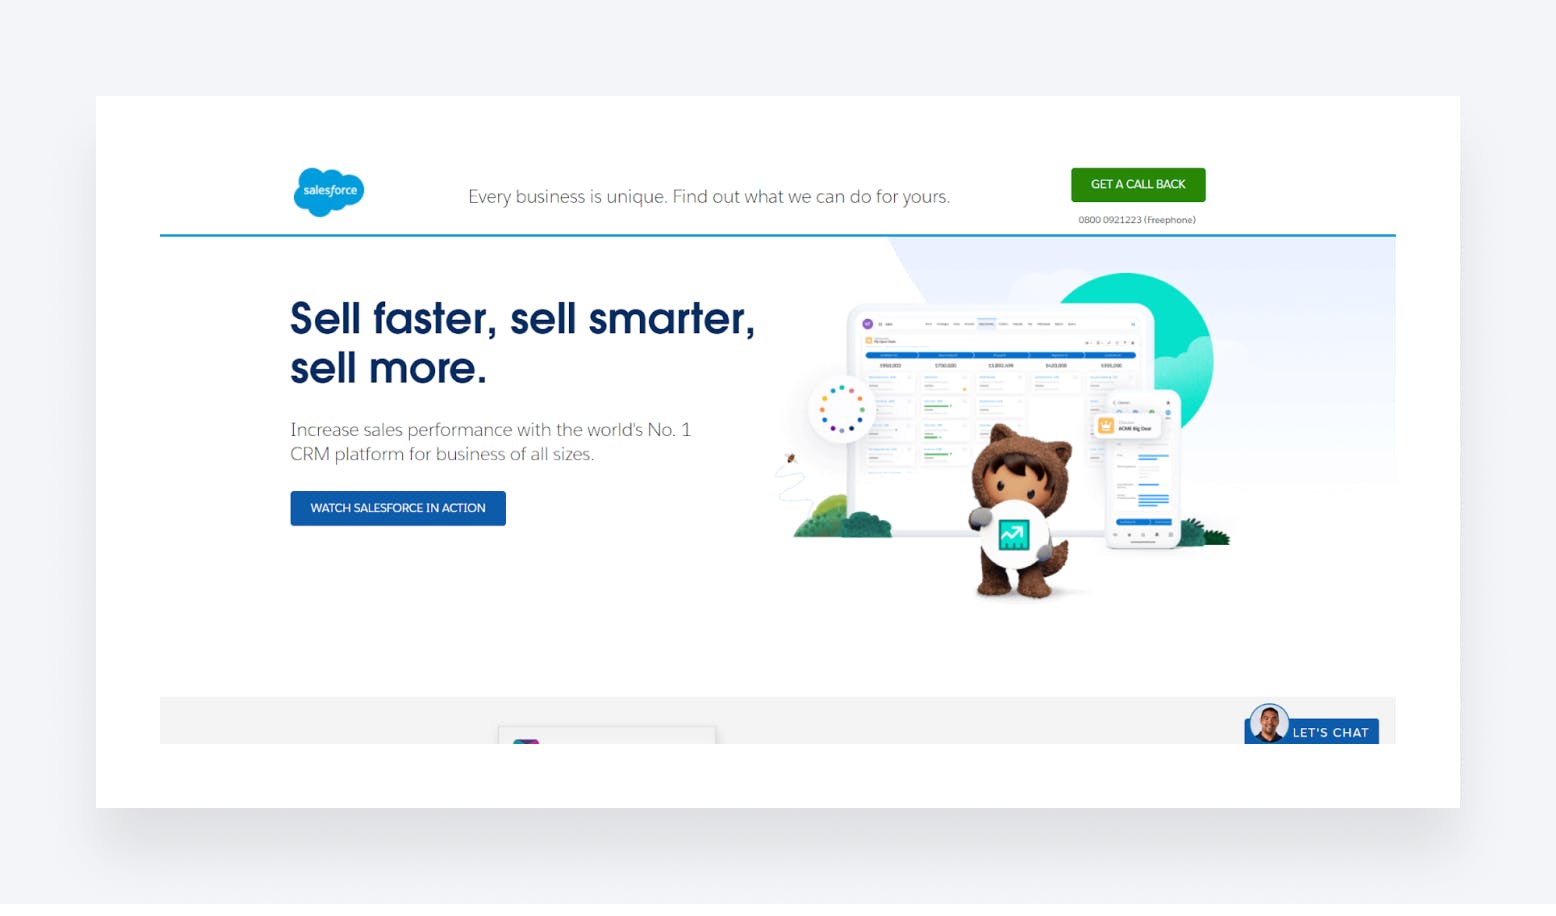 Salesforce’s homepage